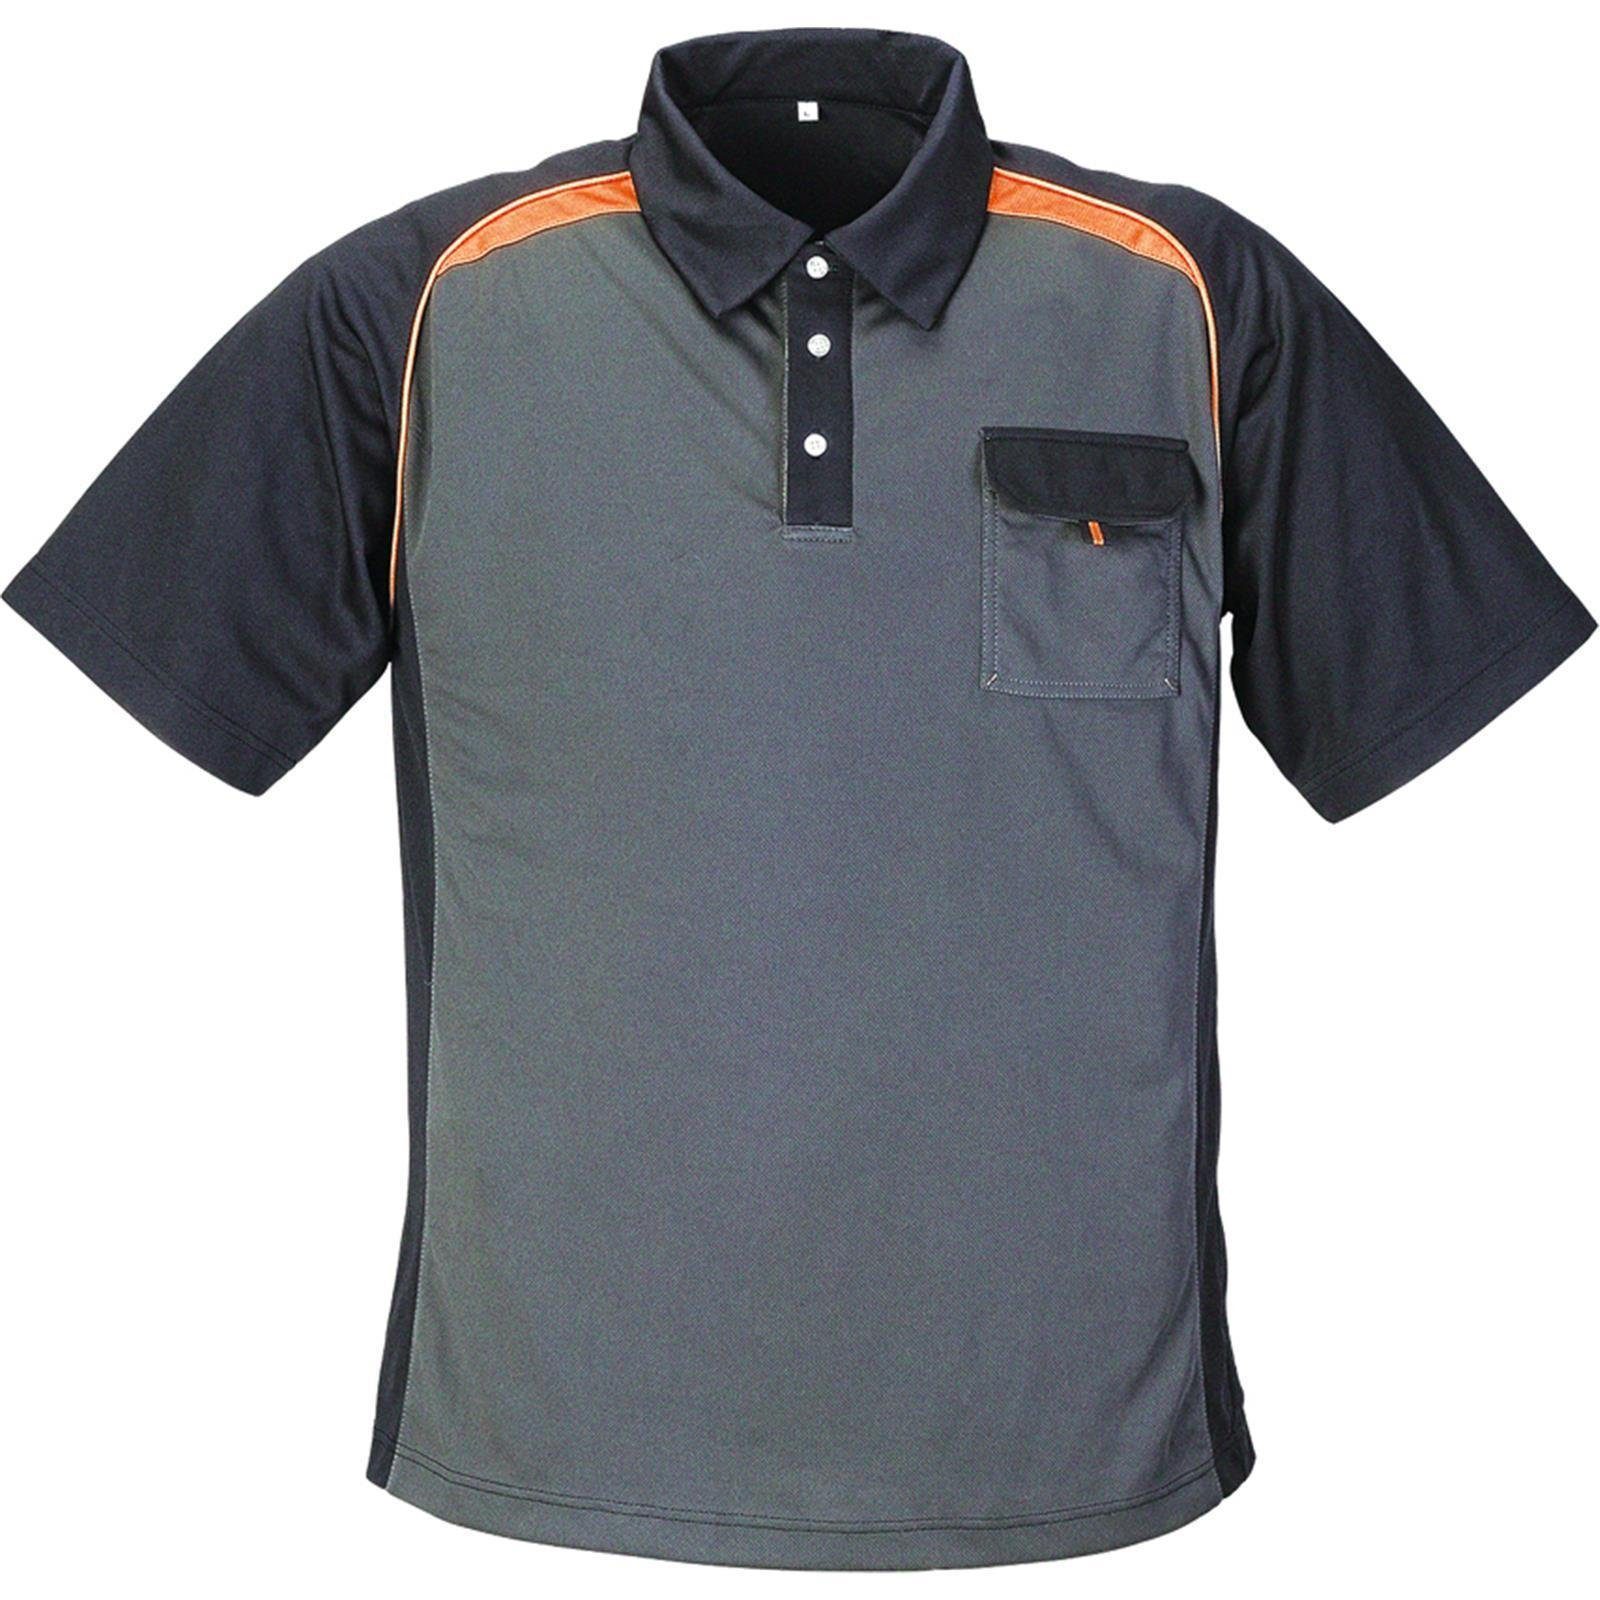 Job Terratrend Poloshirt grau/schwarz/orange